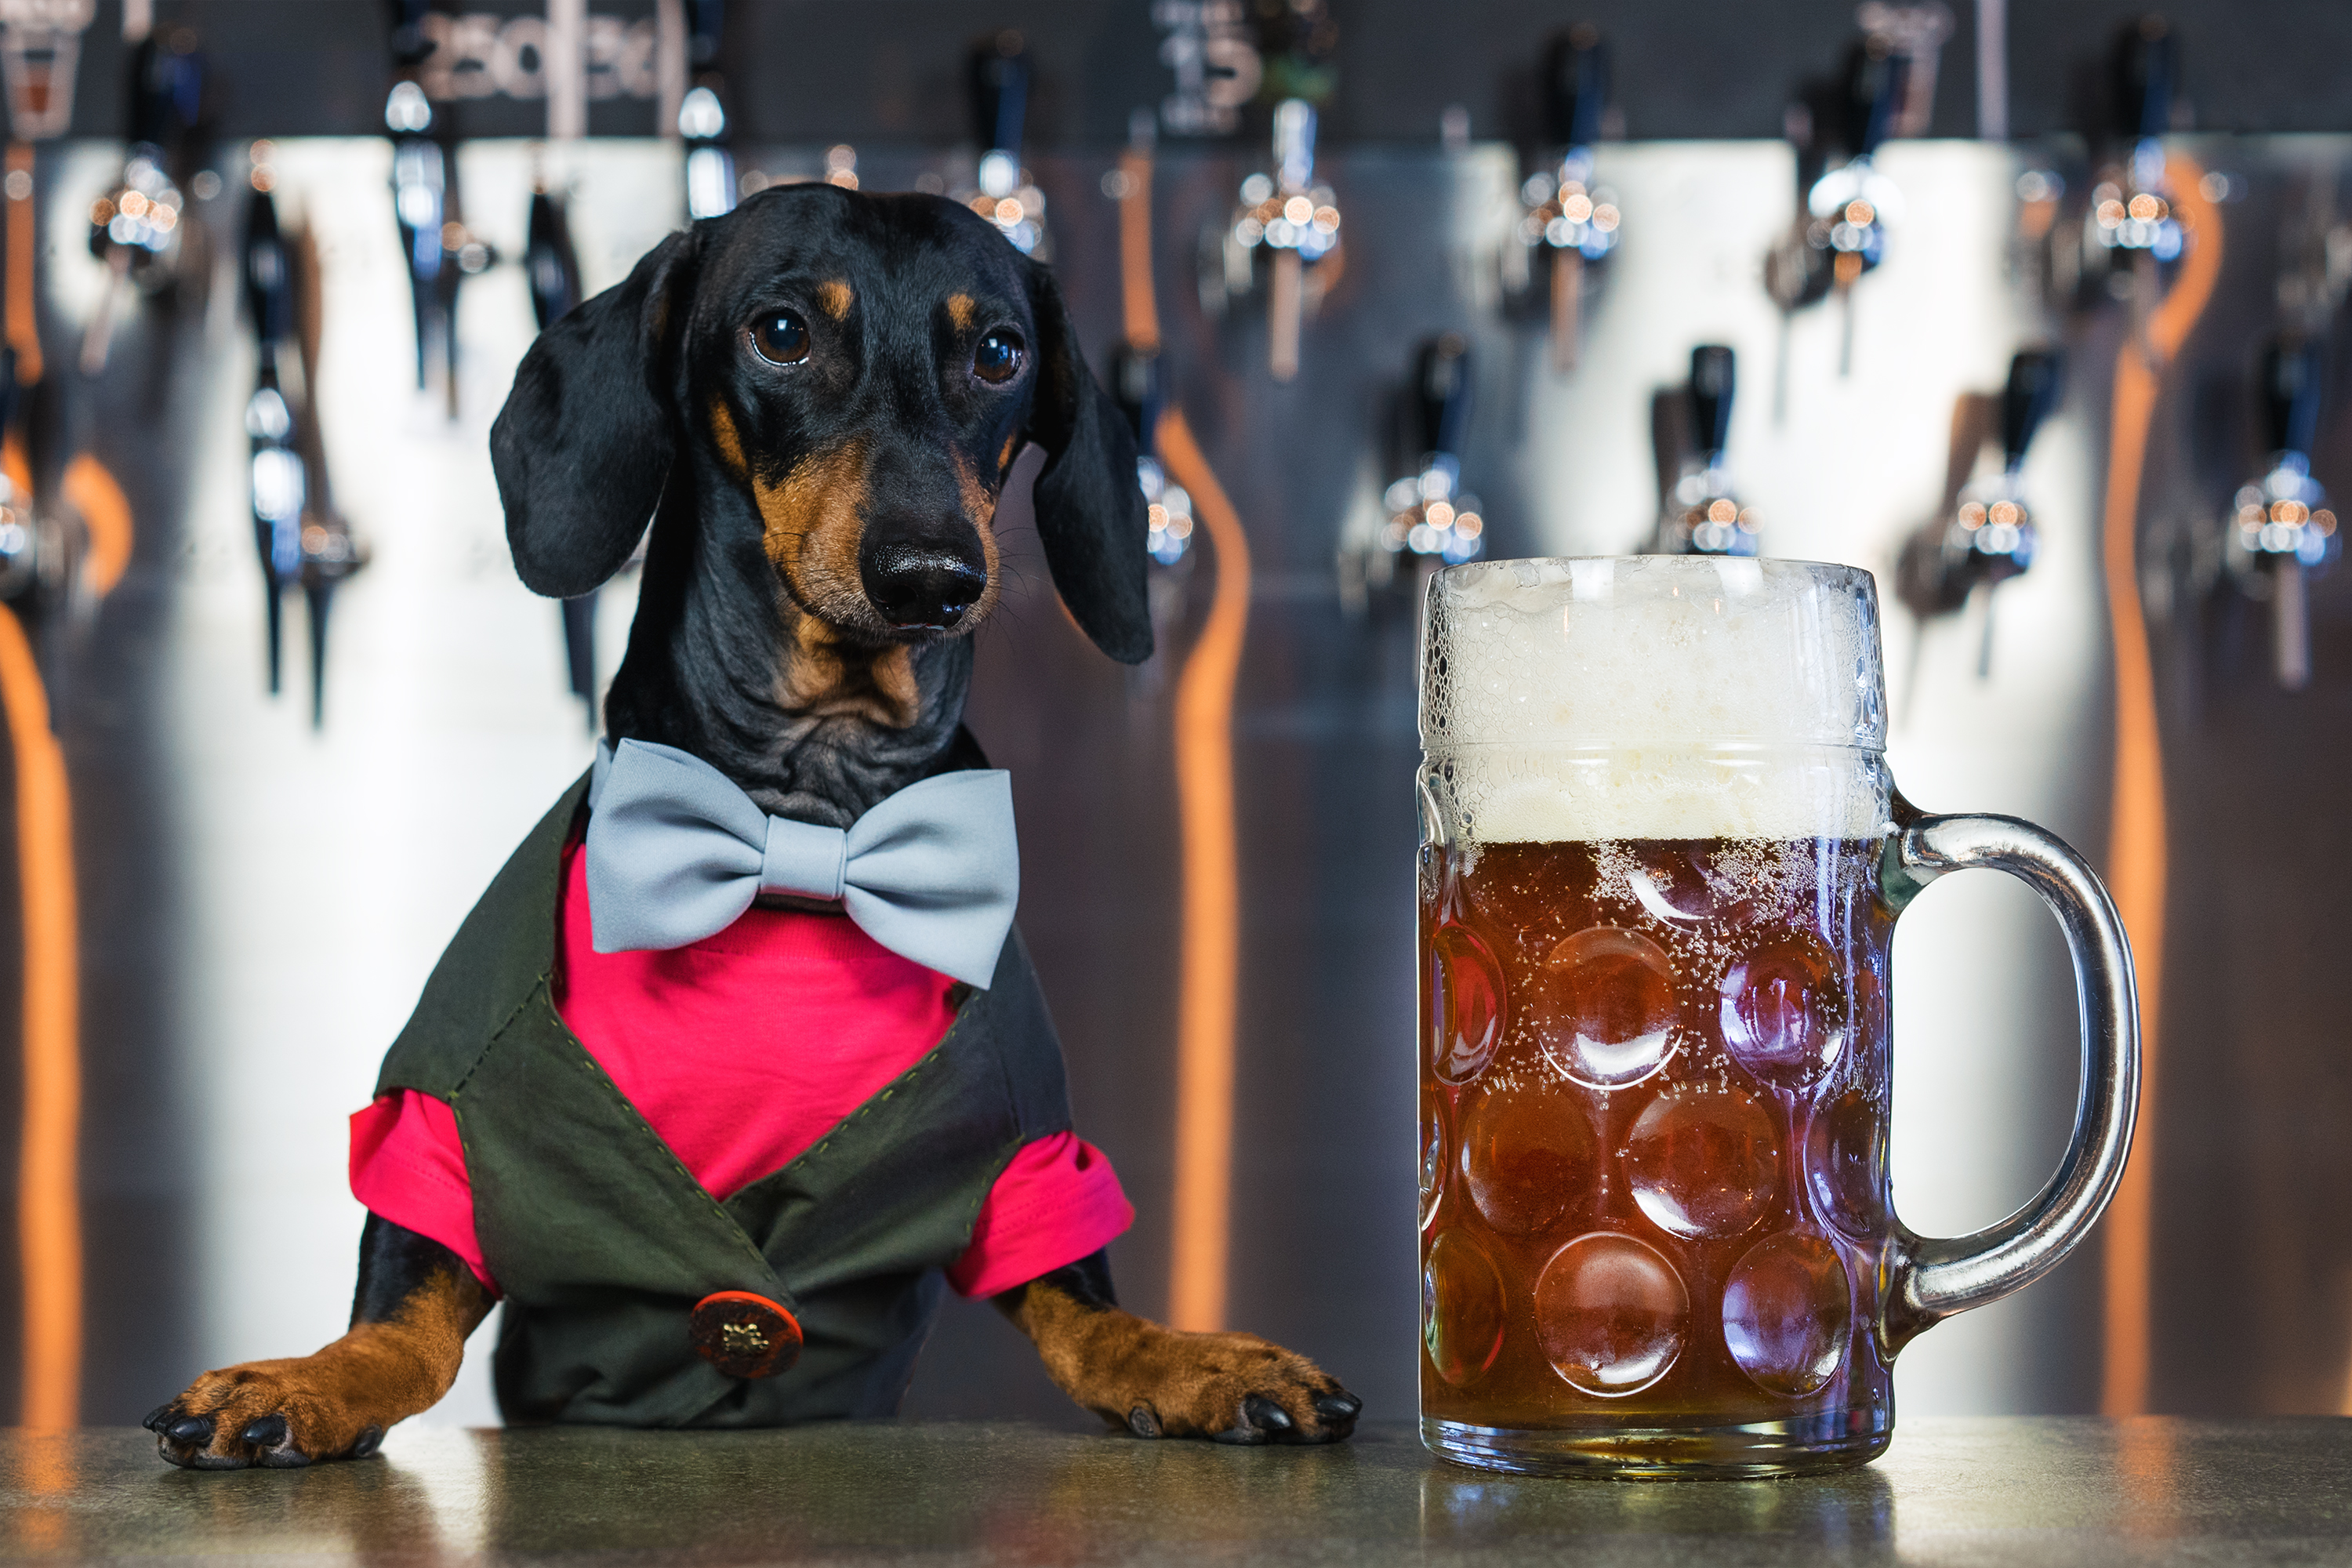 dachshund dog next to beer glass